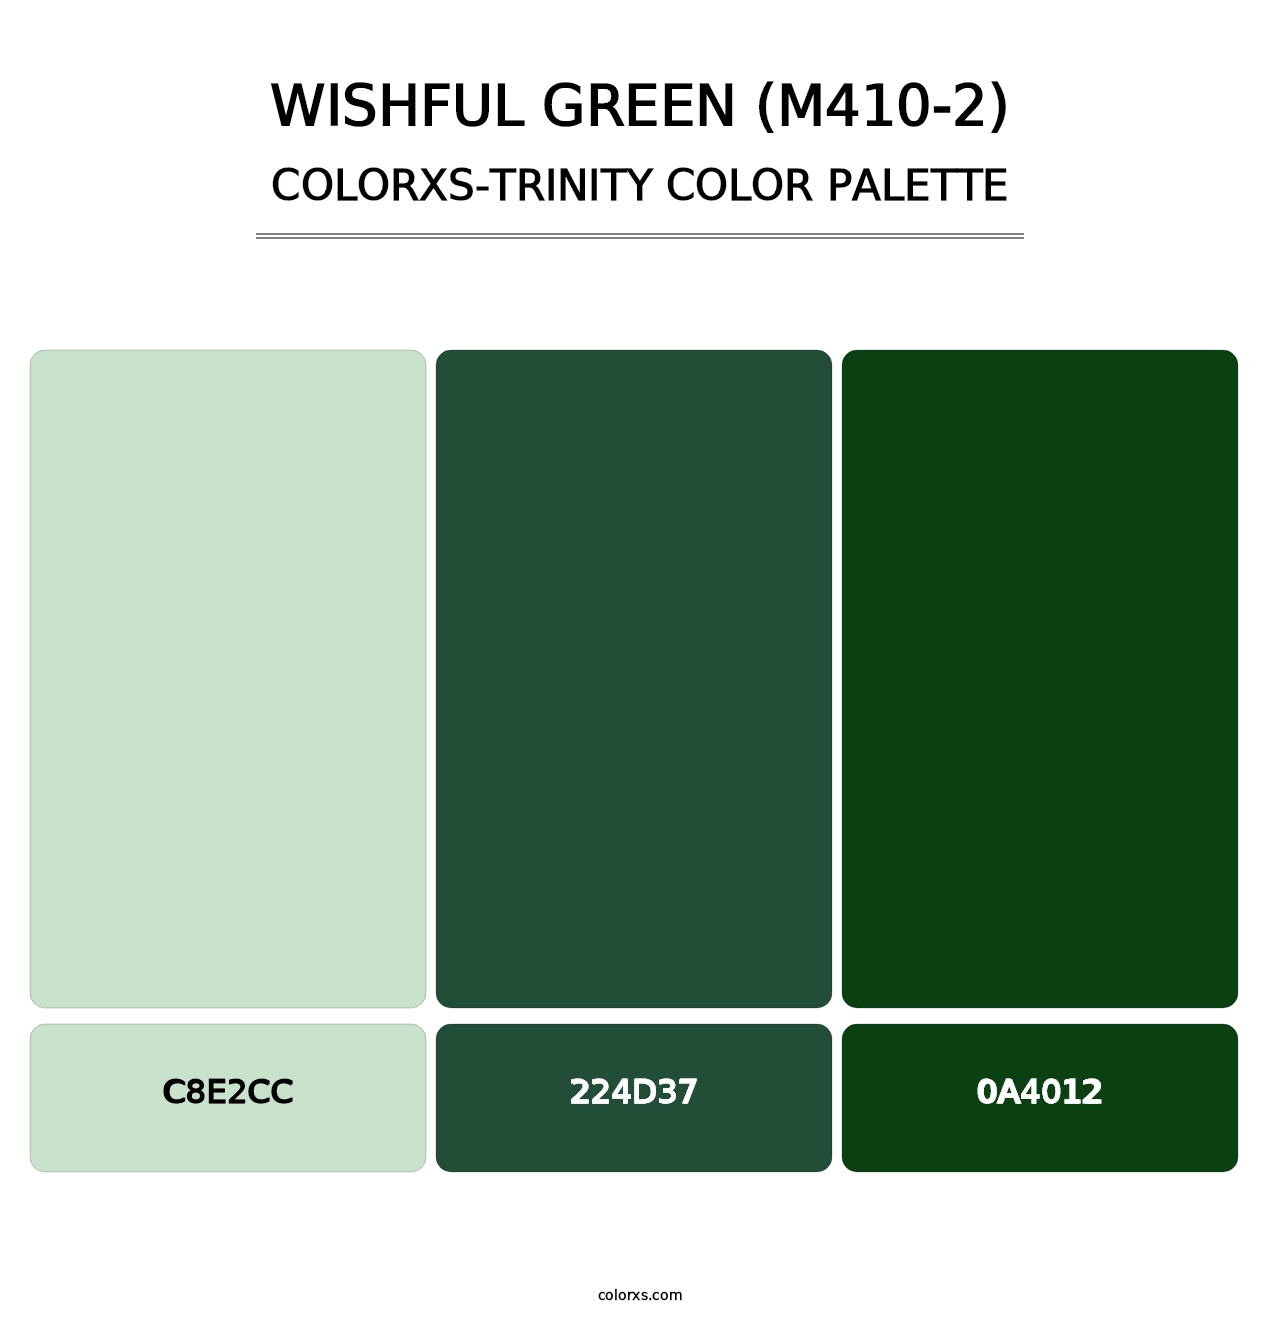 Wishful Green (M410-2) - Colorxs Trinity Palette